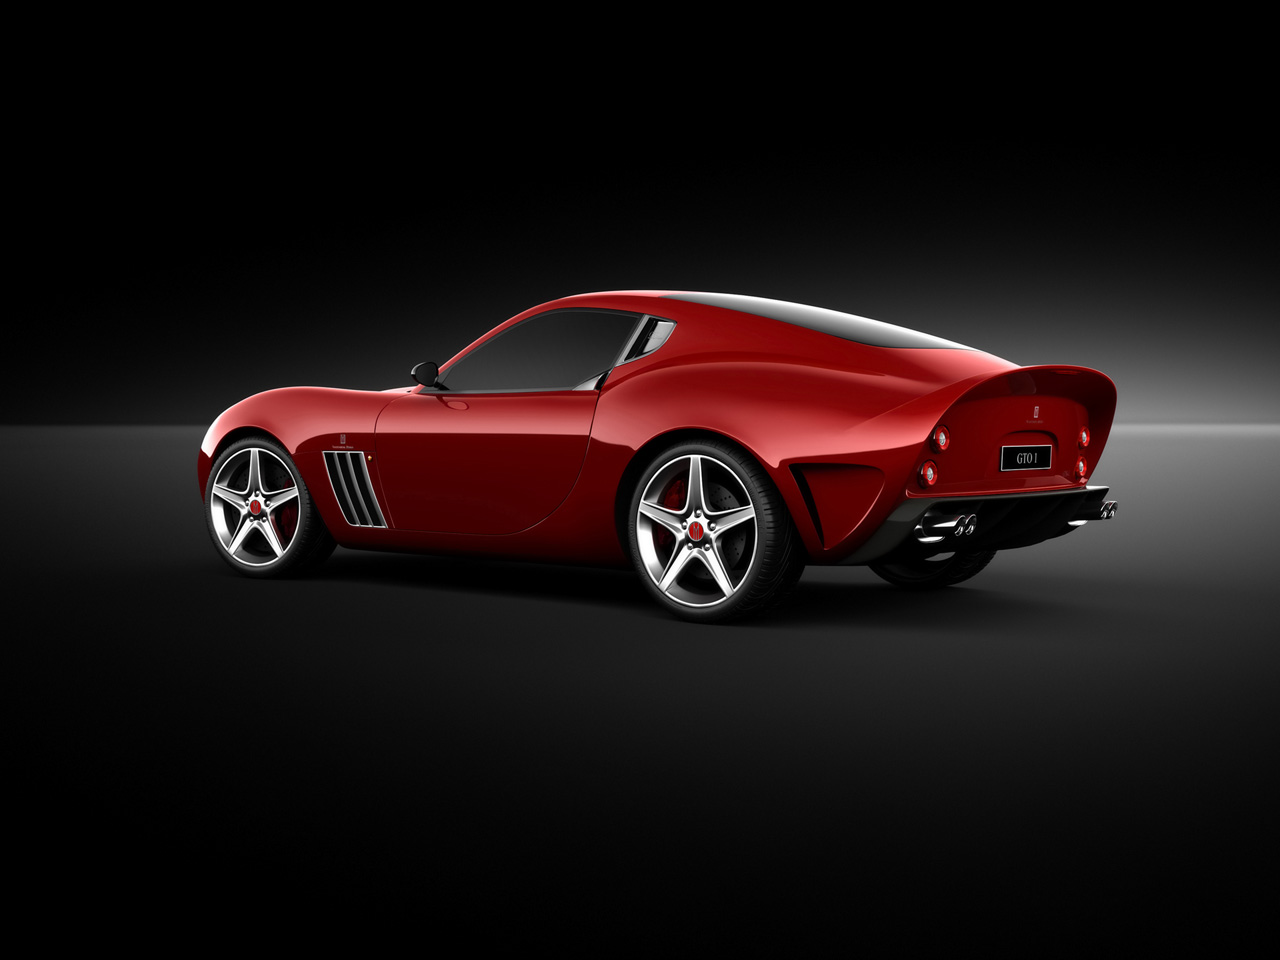 2009-Vandenbrink-Ferrari-599-GTO-Rear-And-Side-1280x960.jpg